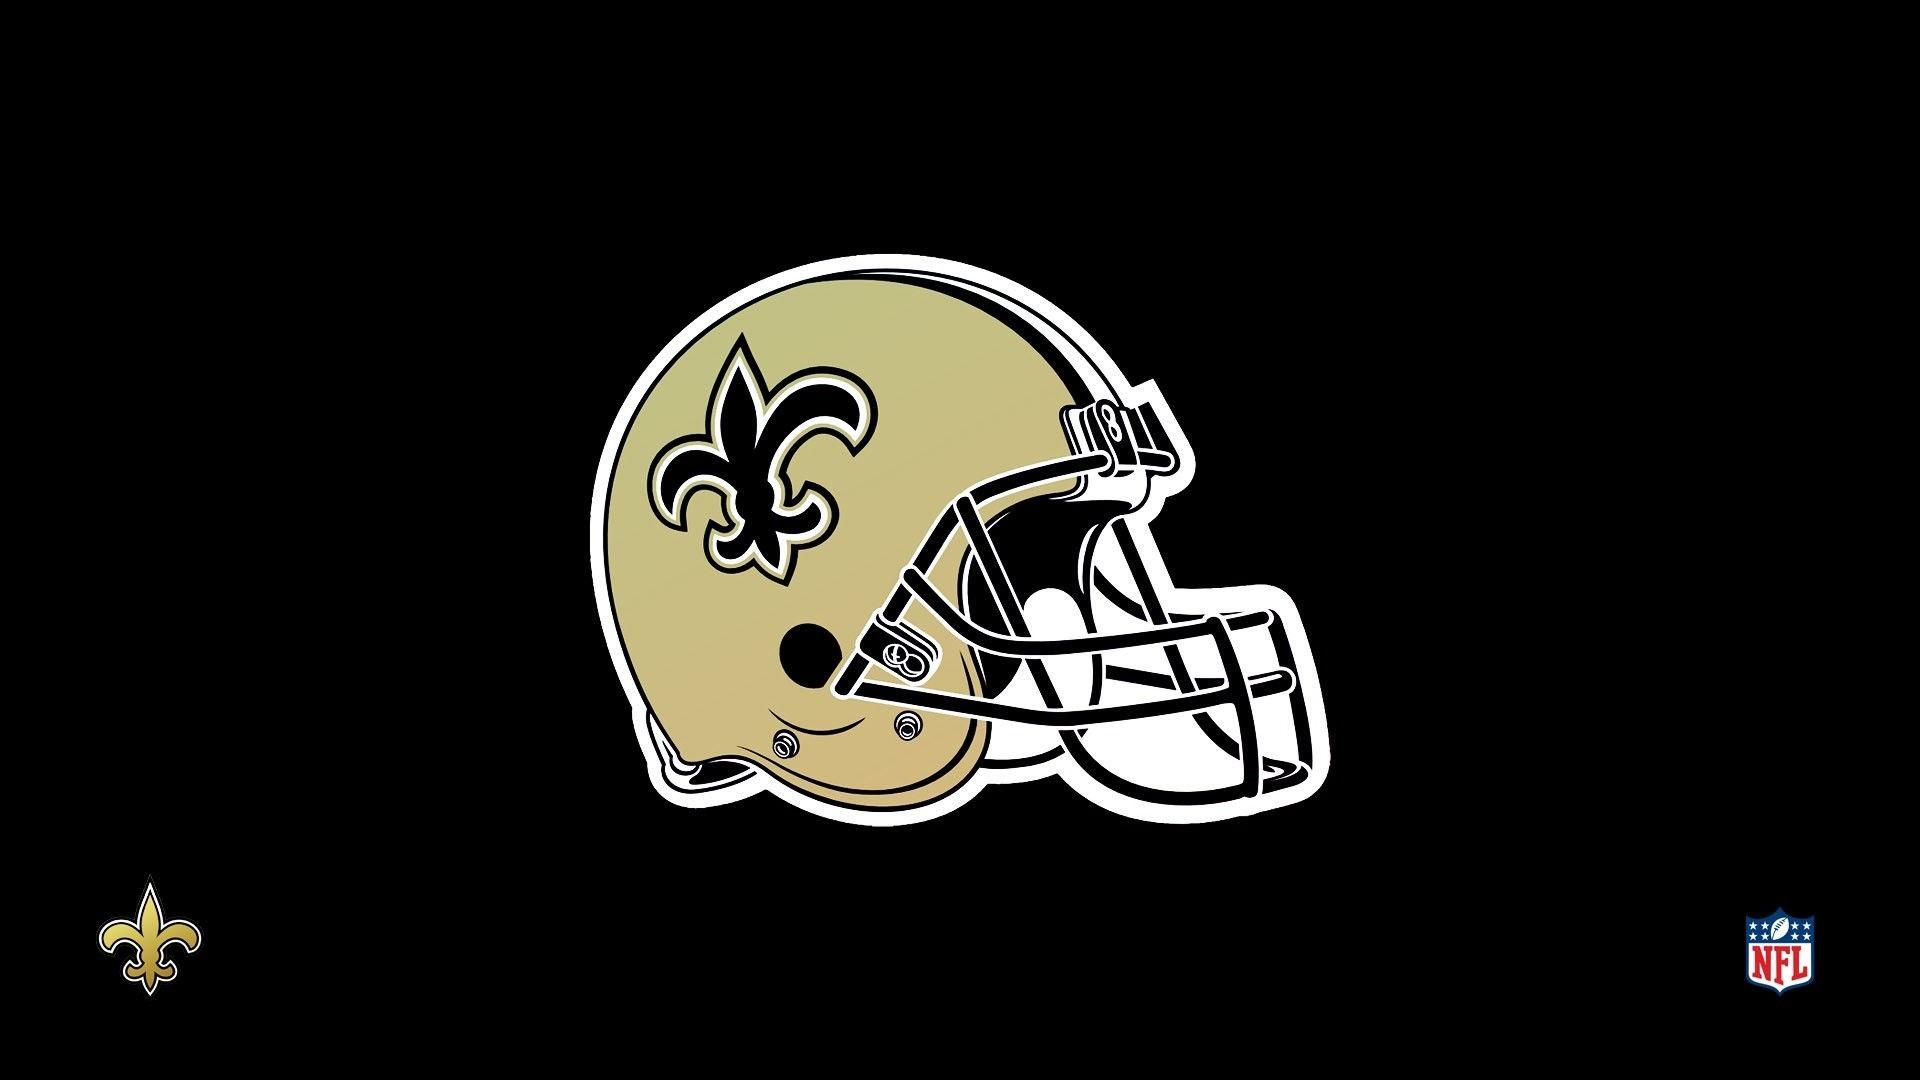 HD Desktop Wallpaper New Orleans Saints NFL Football Wallpaper